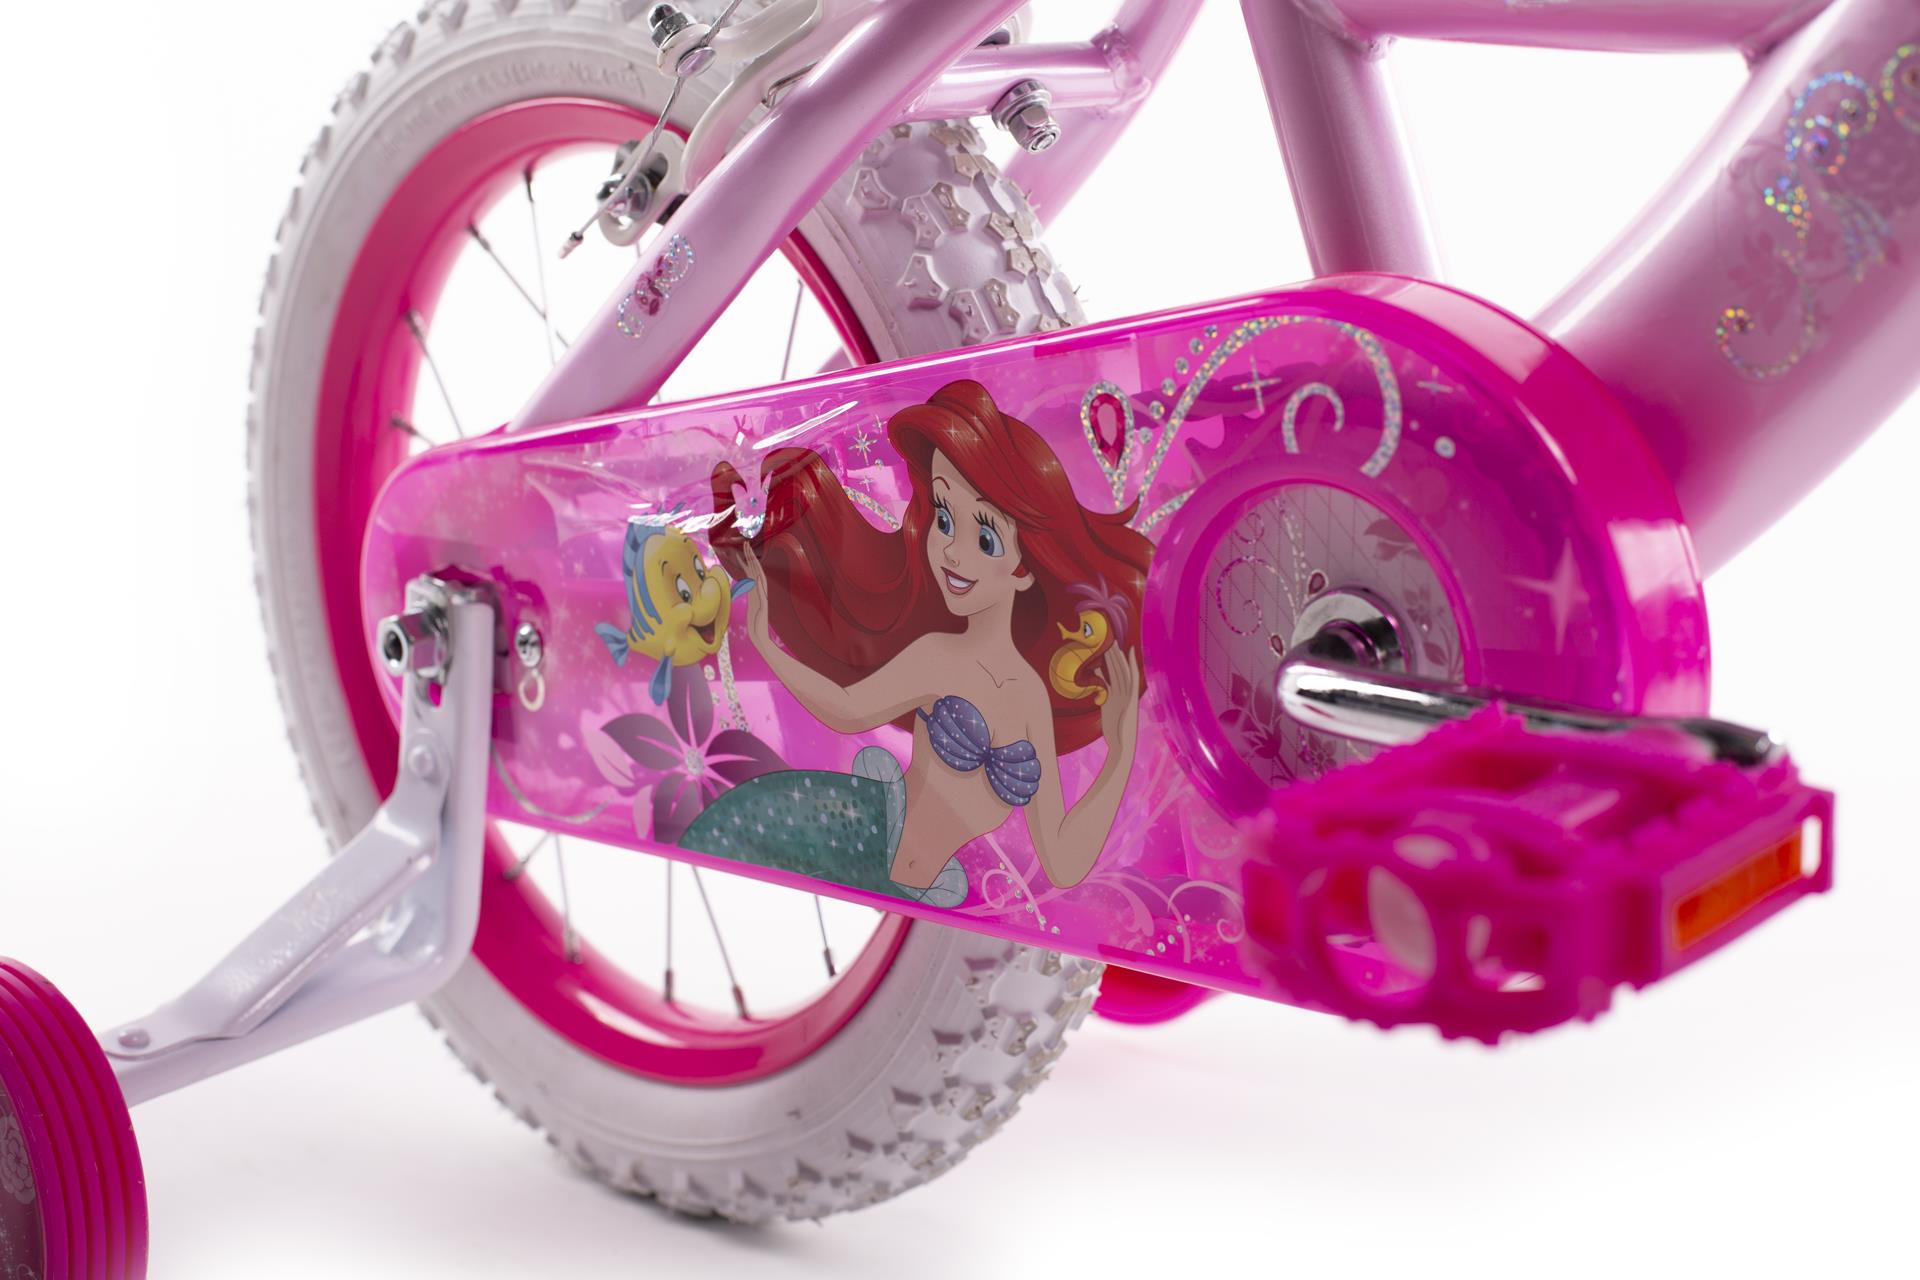 Huffy Princess 14" Kids Bicycle